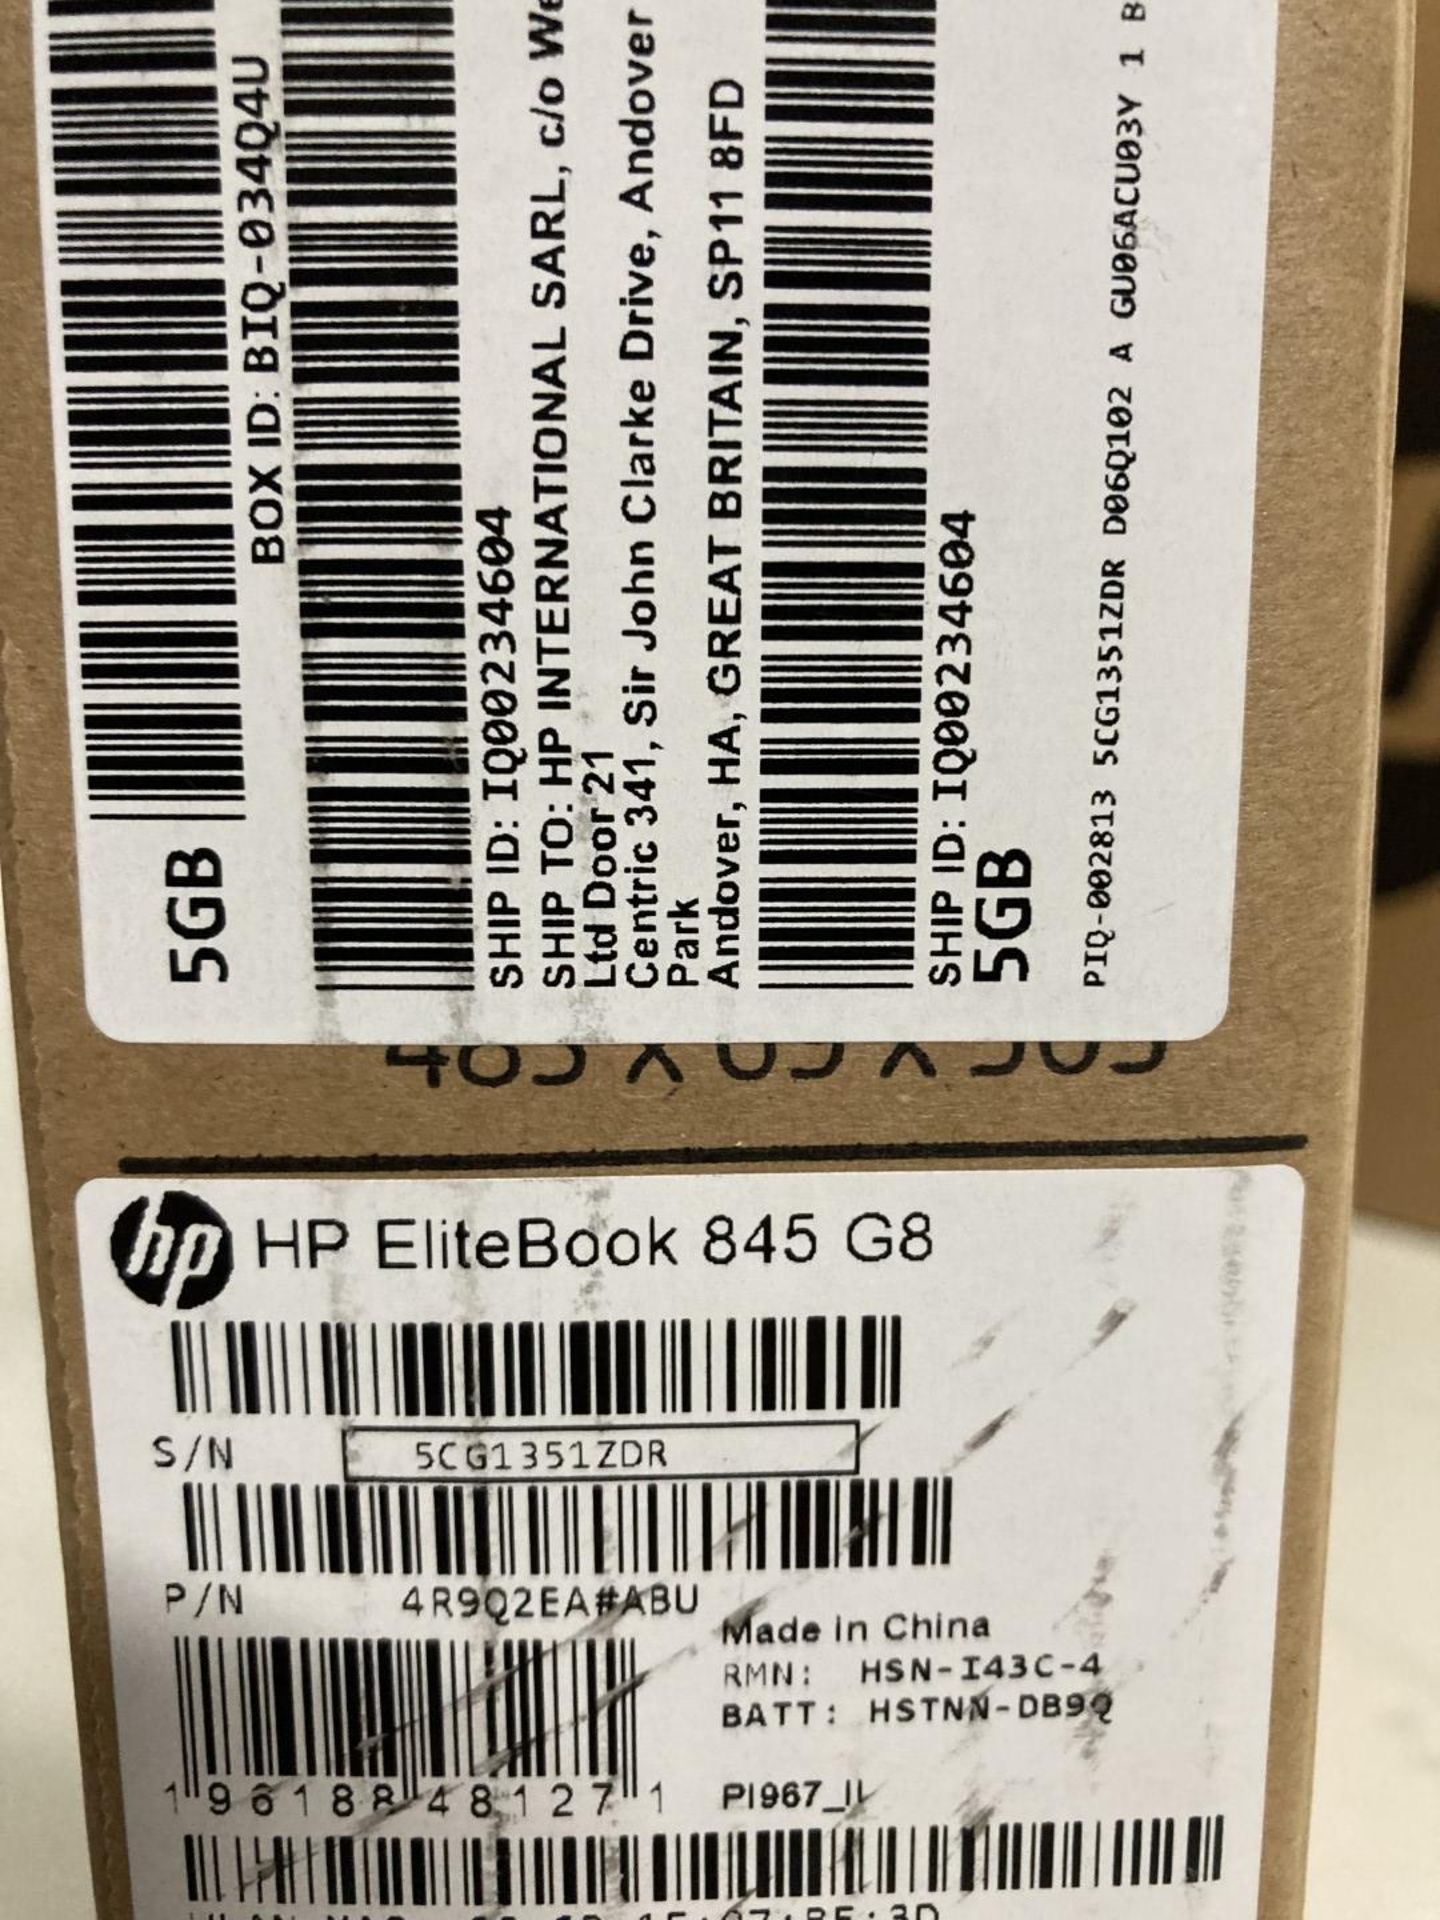 HP Elitebook 845 G8 AMD Laptop (New in Box) - Image 7 of 7